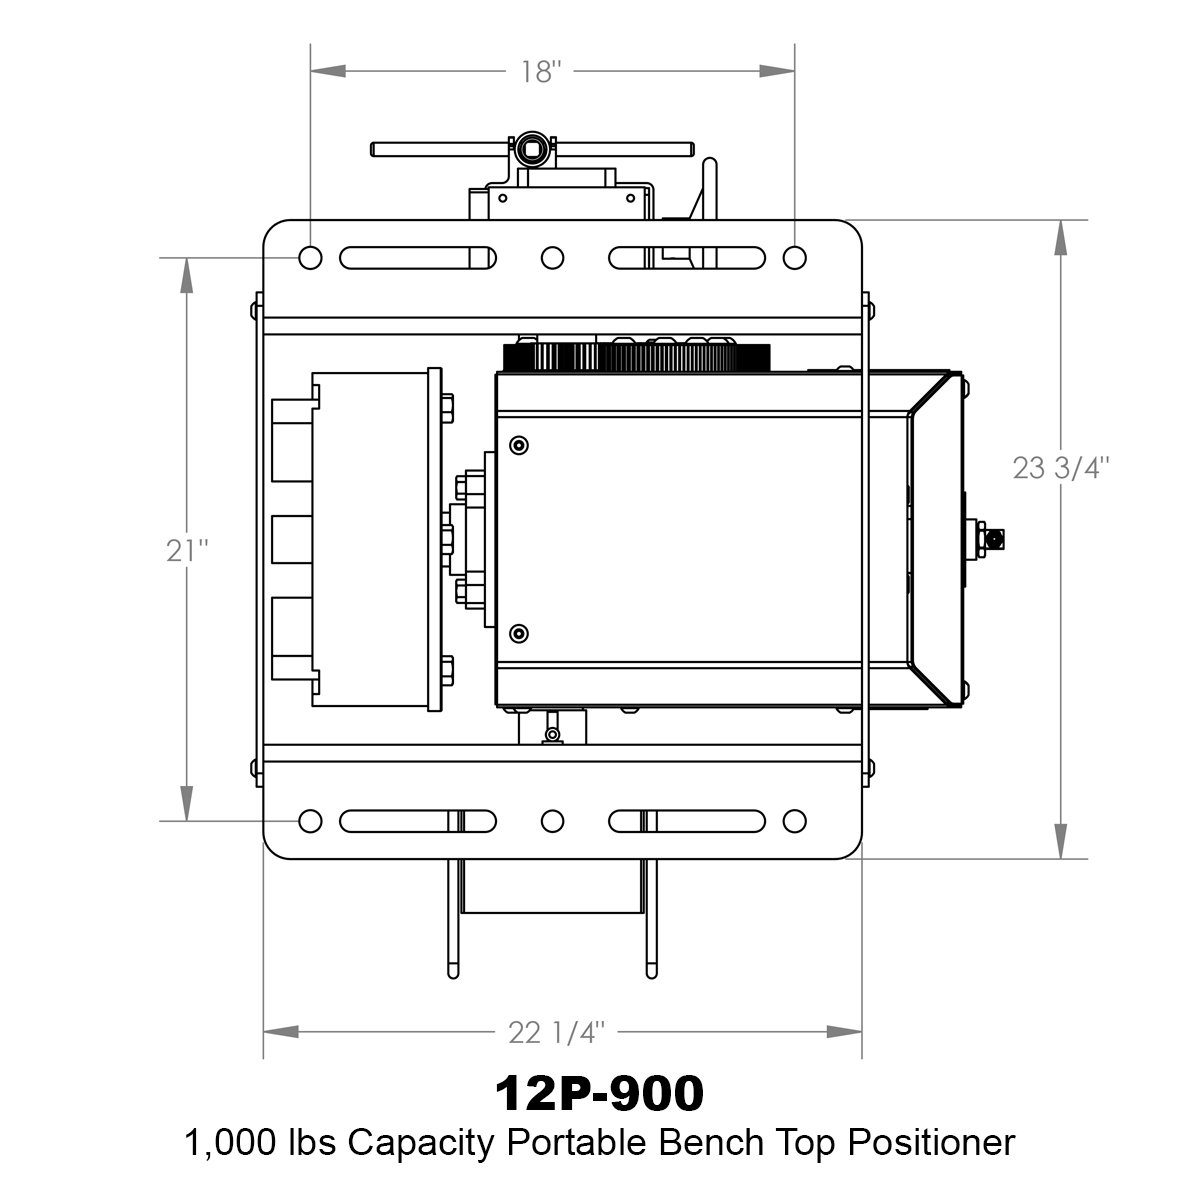 04-1000lb-Portable-Bench-Top-Positioner